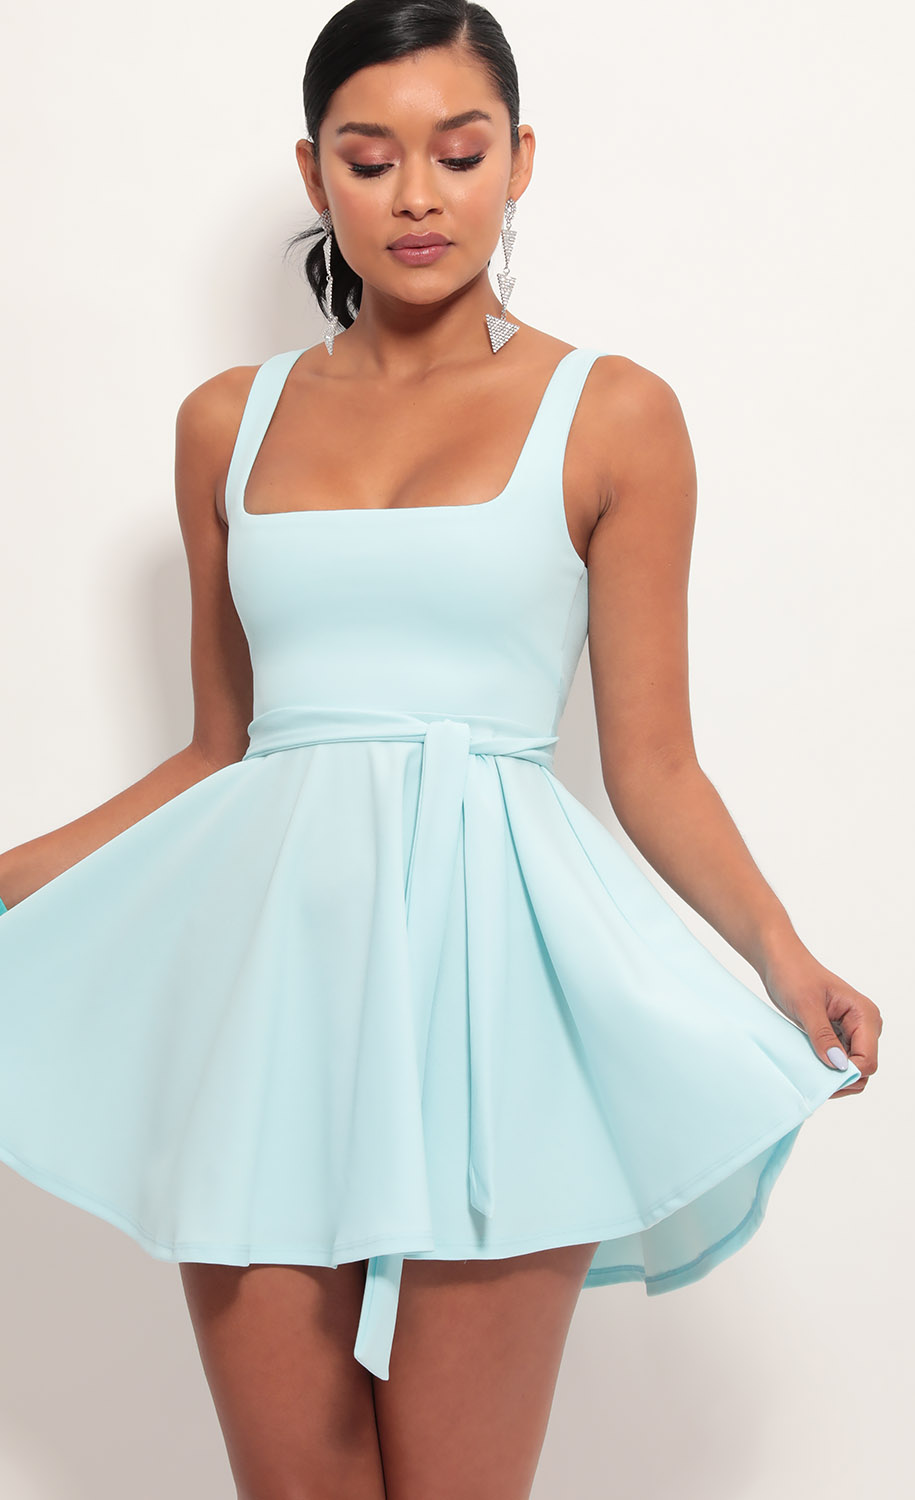 Party dresses > Key West A-line Dress in Aqua Blue